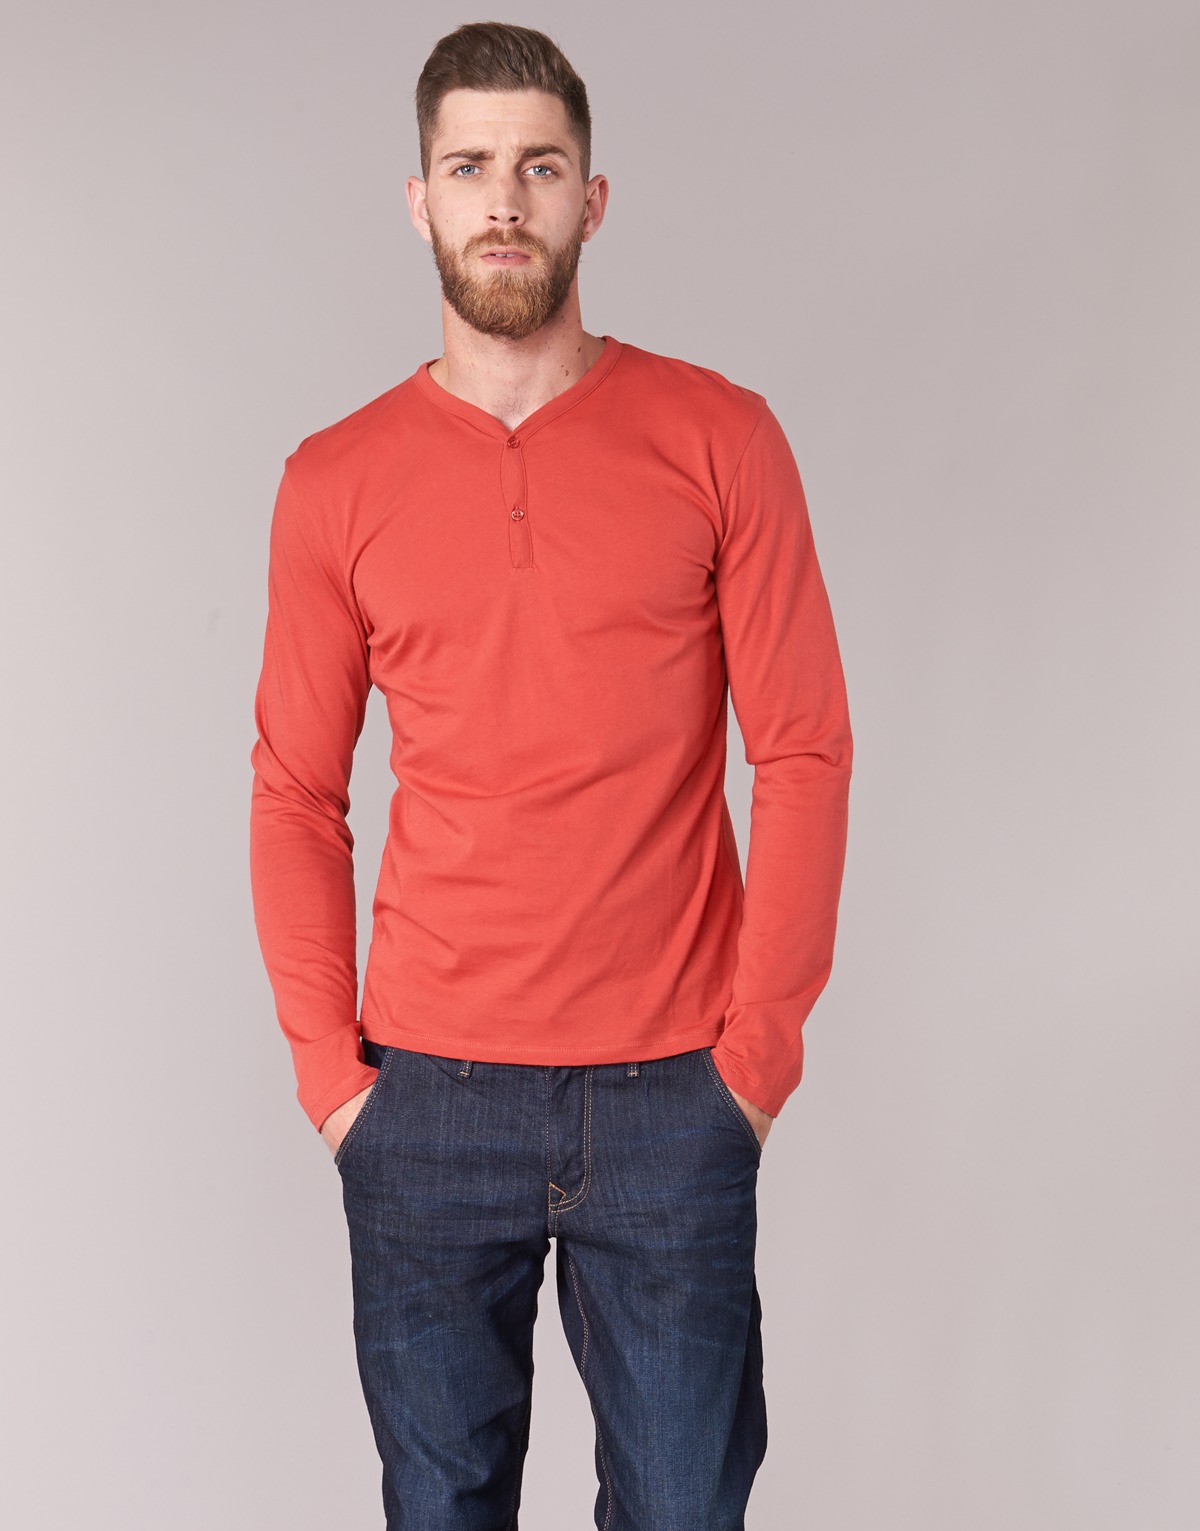 textil Herre Langærmede T-shirts BOTD ETUNAMA Rød